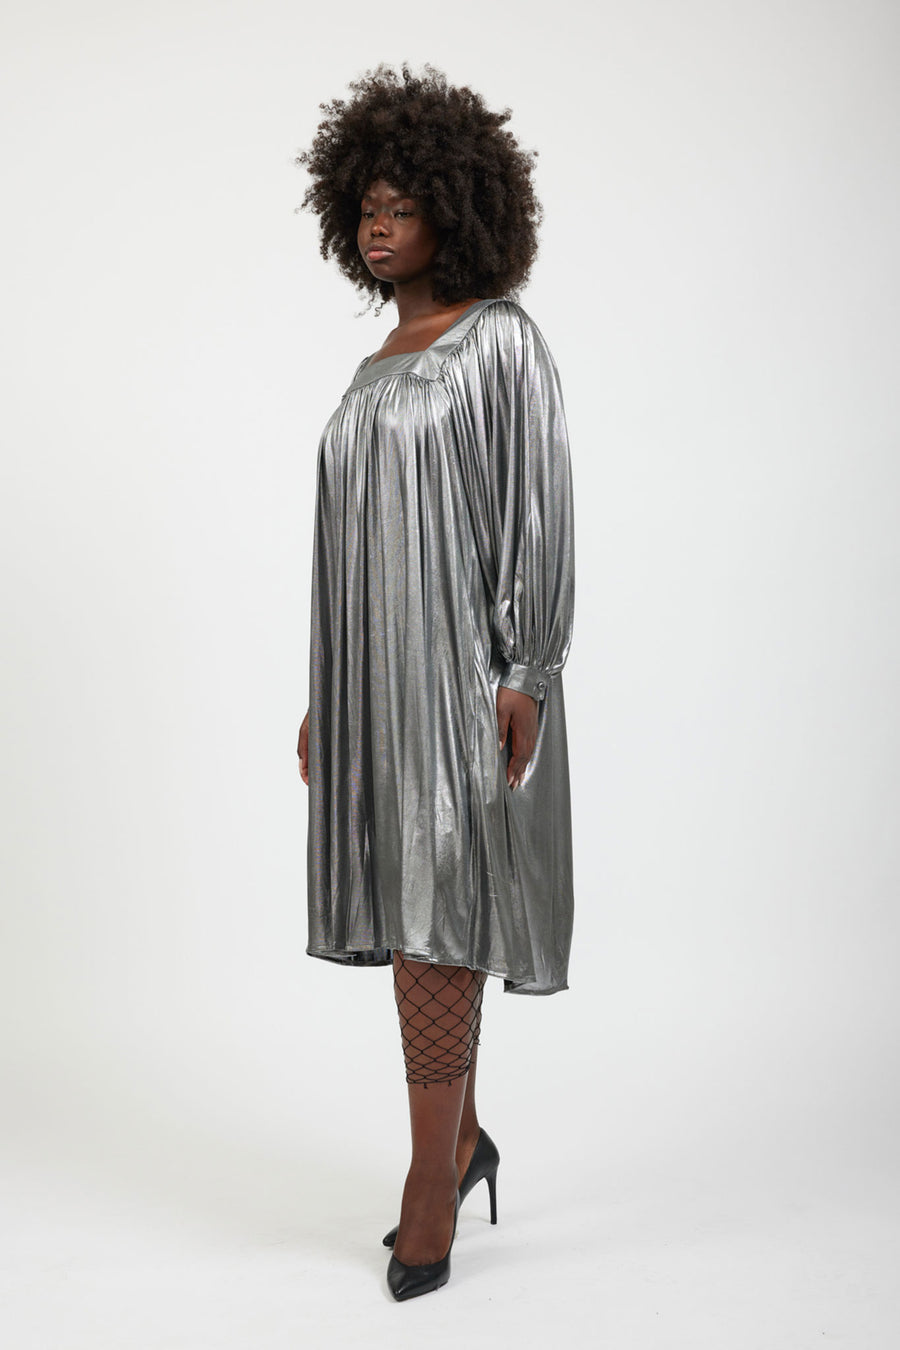 BATSHEVA - Beaumaris Dress in Silver